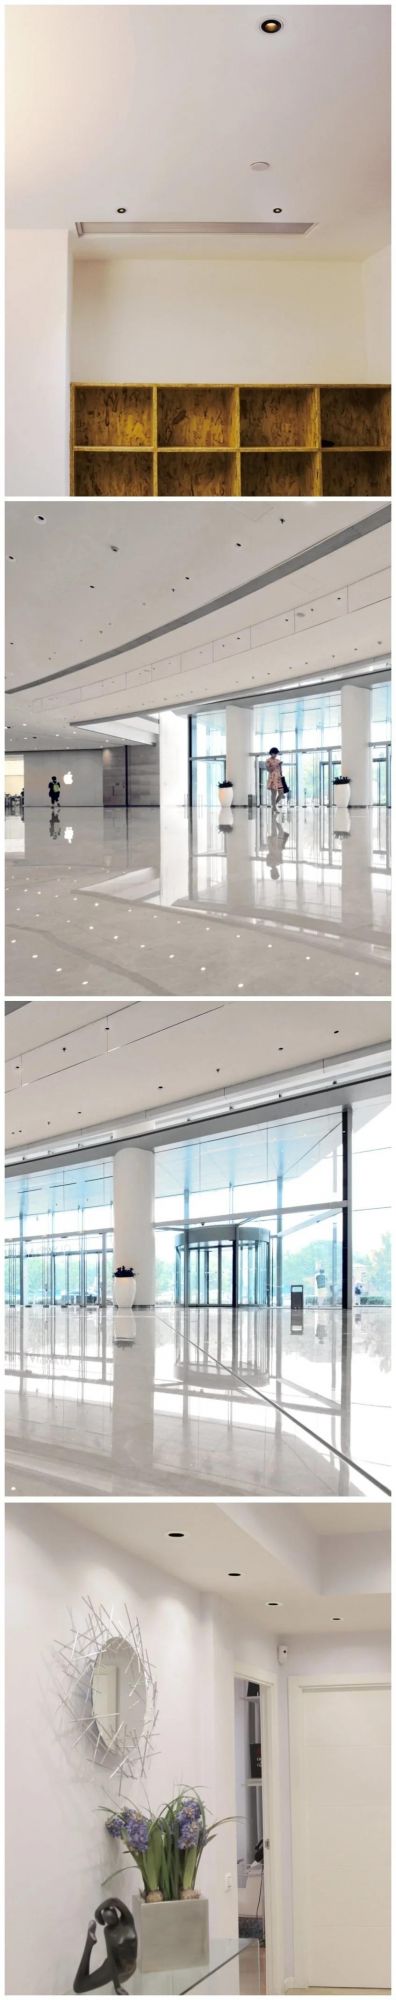 Venezina Lighting 6W/10W Square Shape Narrow Trim Spotlight Adjustable LED Light Ceiling Recessed LED Downlight